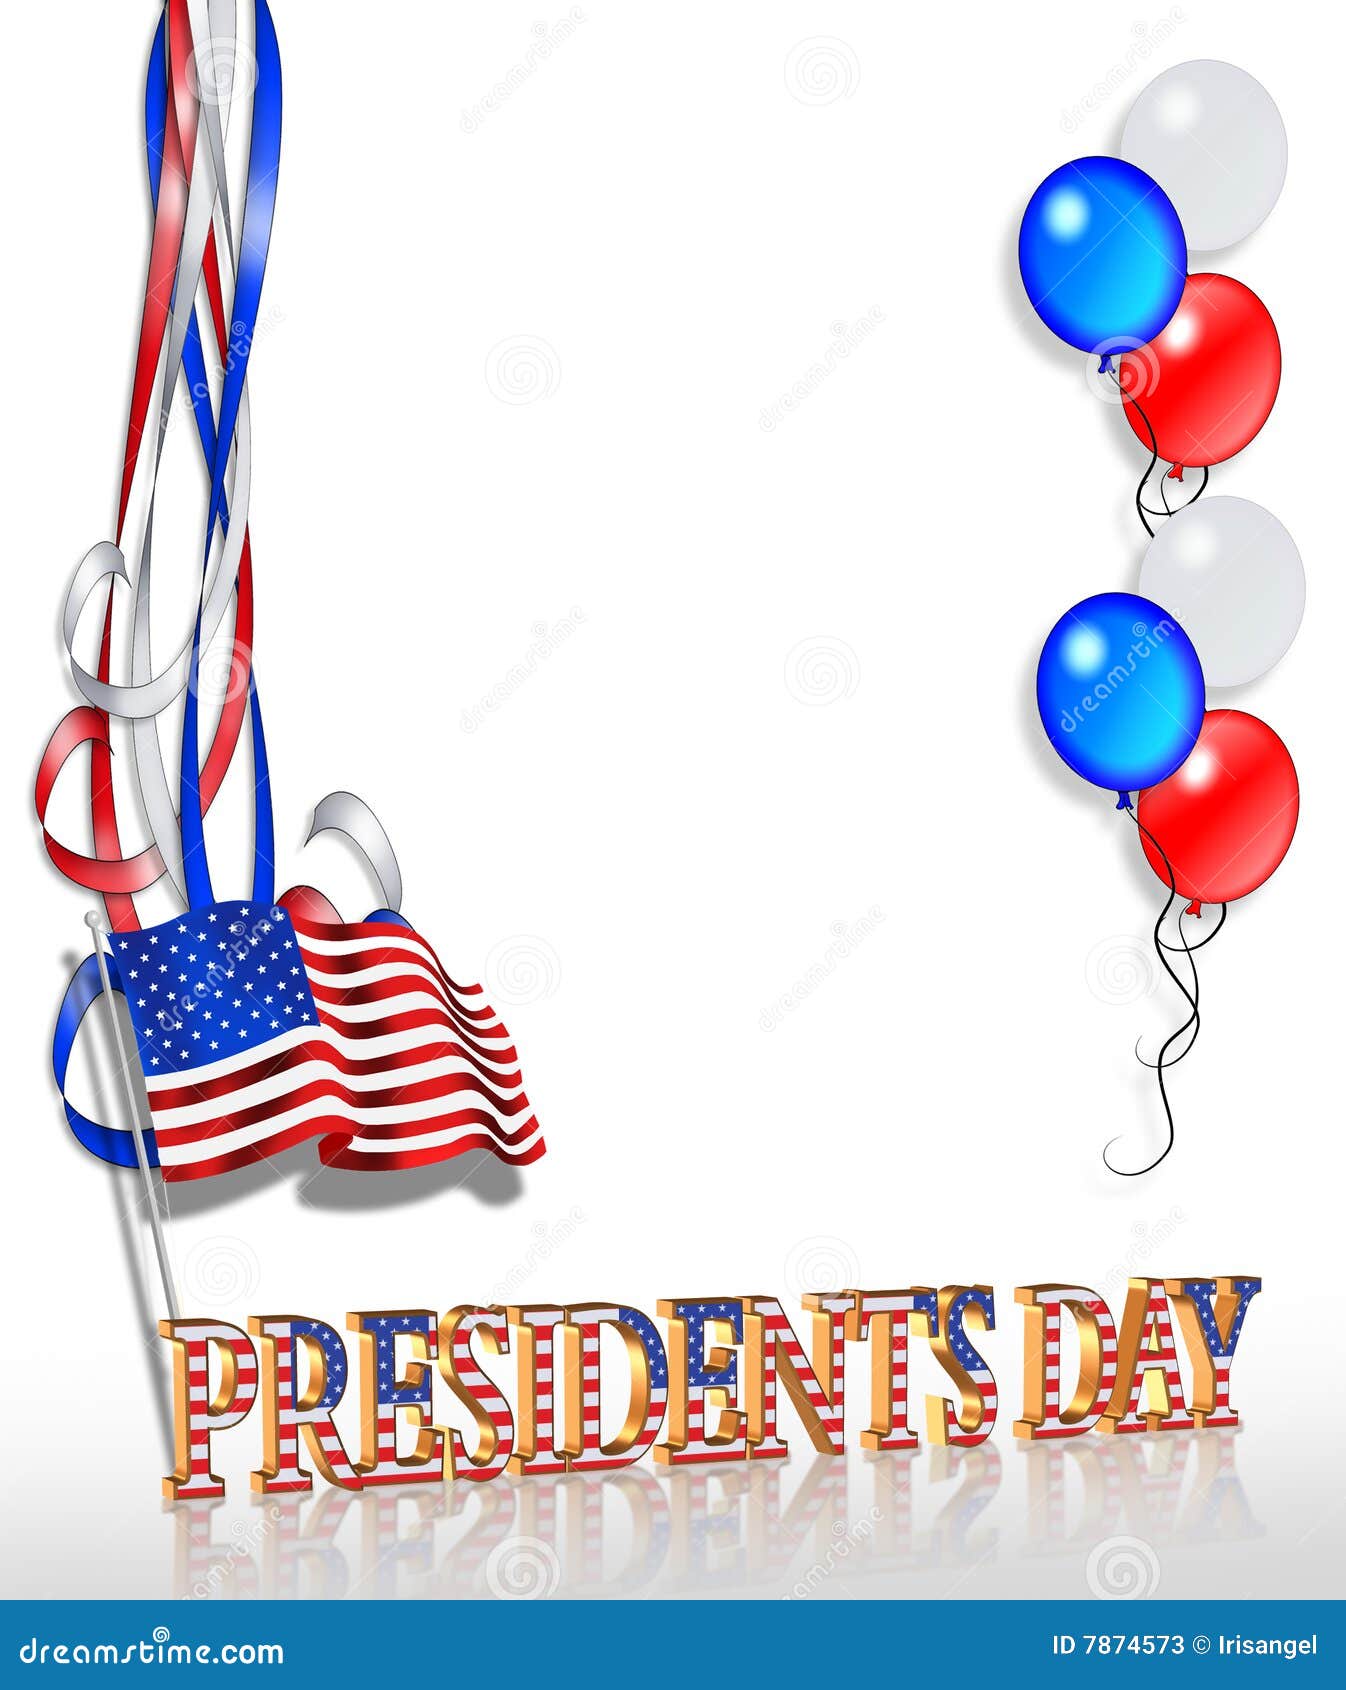 Presidents Day Background 2 Stock Photos - Image: 7874573